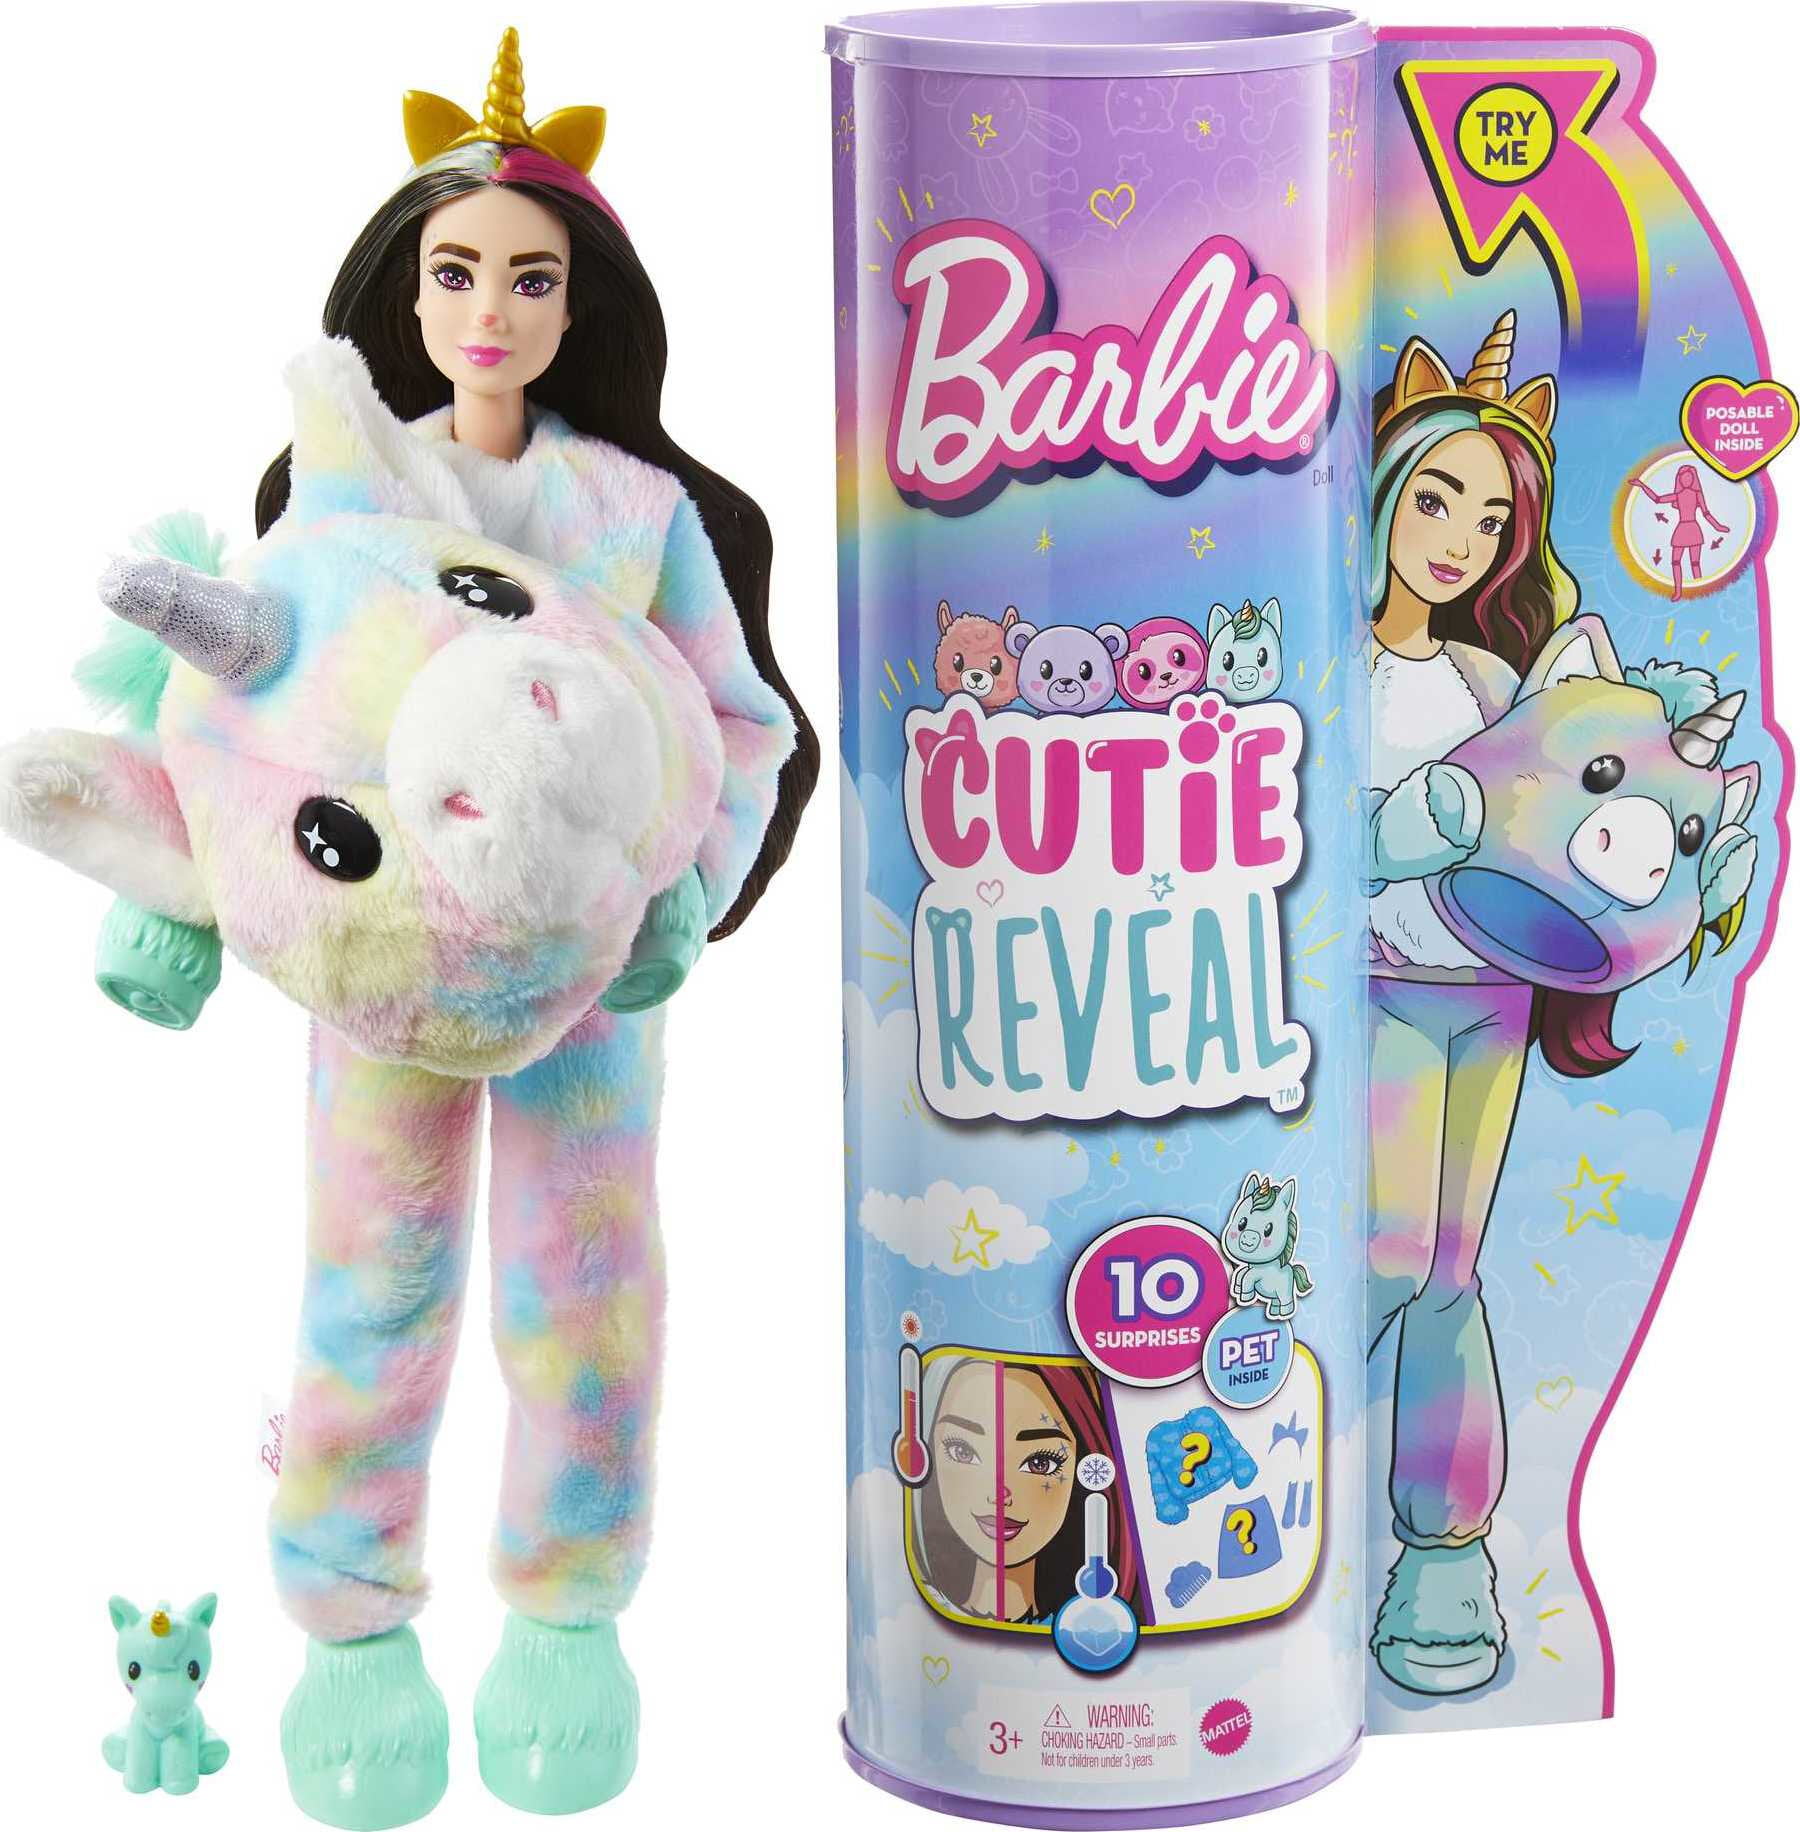 Ages 3 Barbie Biggest Blind Bag Ever Kids Plush Pet Figure Unicorn Headband 